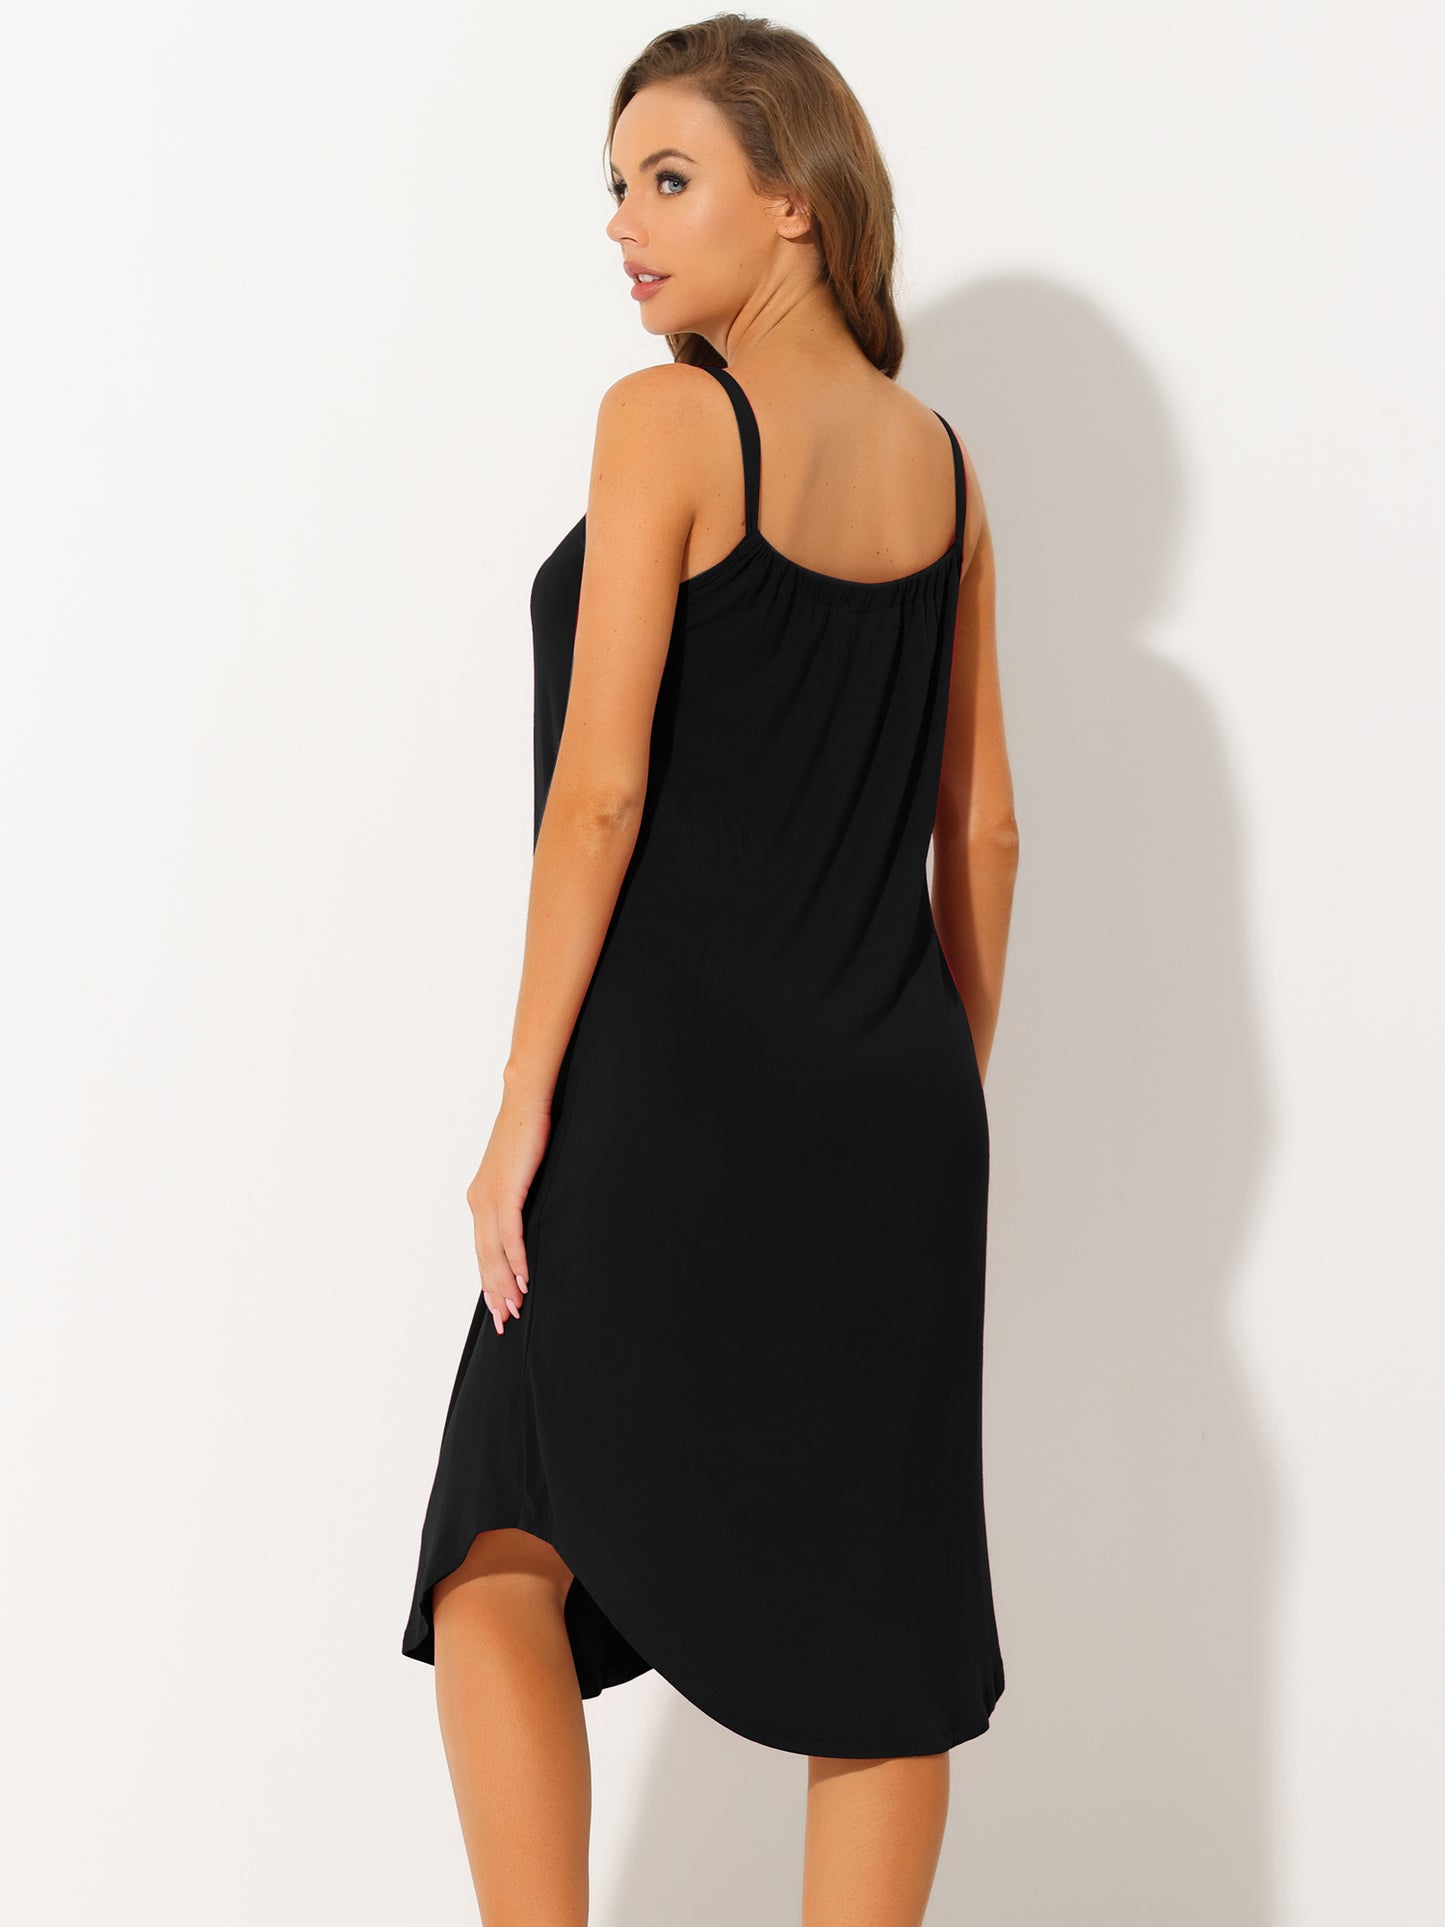 cheibear Pajama V Neck Nightdress Stretchy Lounge Cami Dress Black